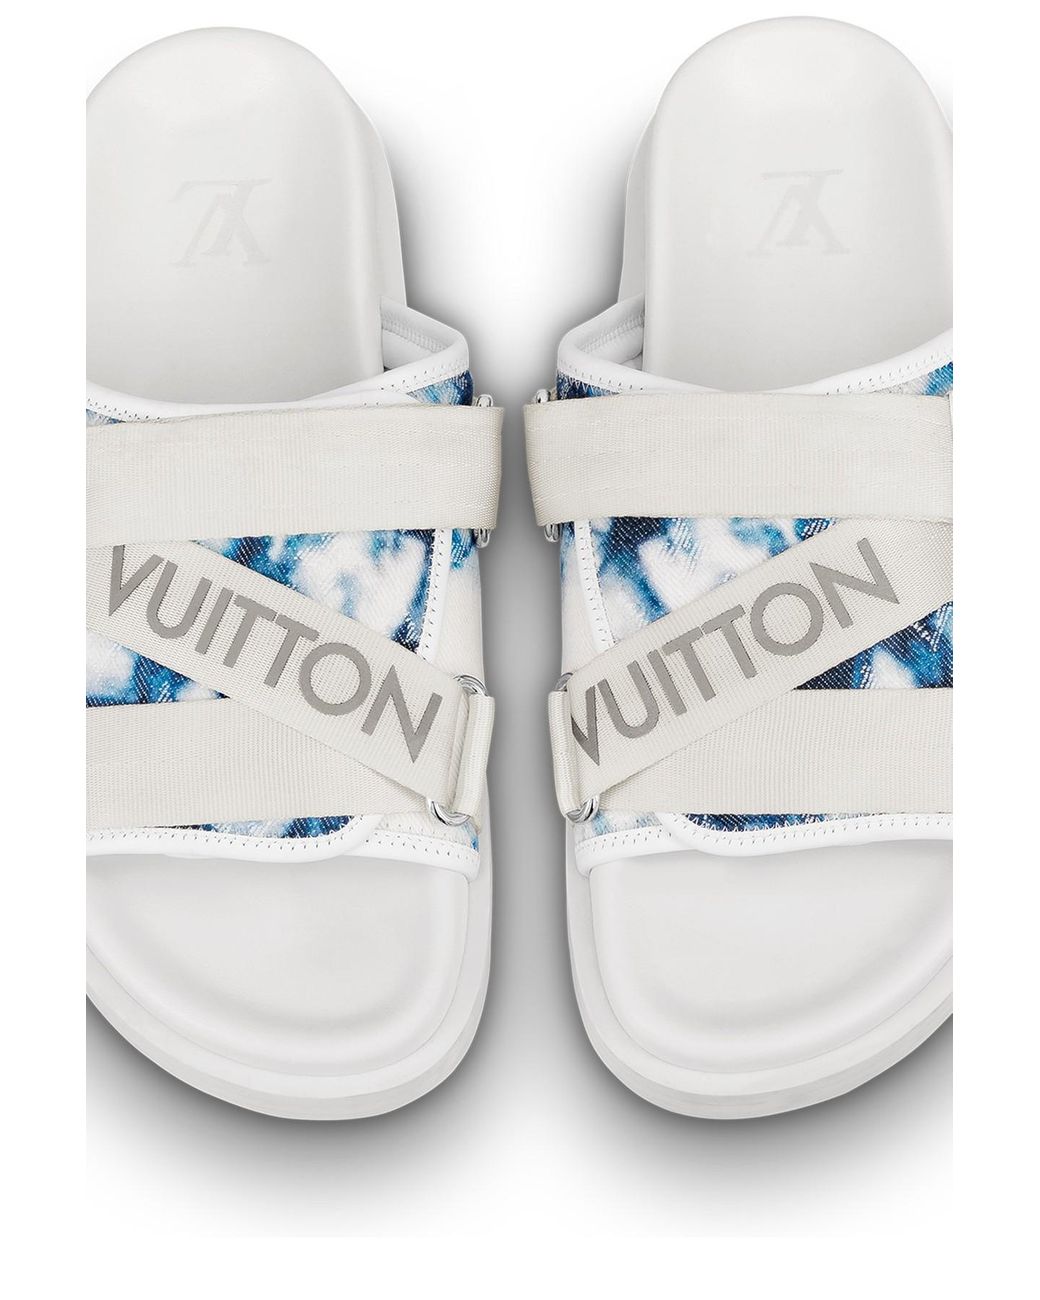 LOUIS VUITTON Mule Sandals Honolulu White Monogram Leather UK 6